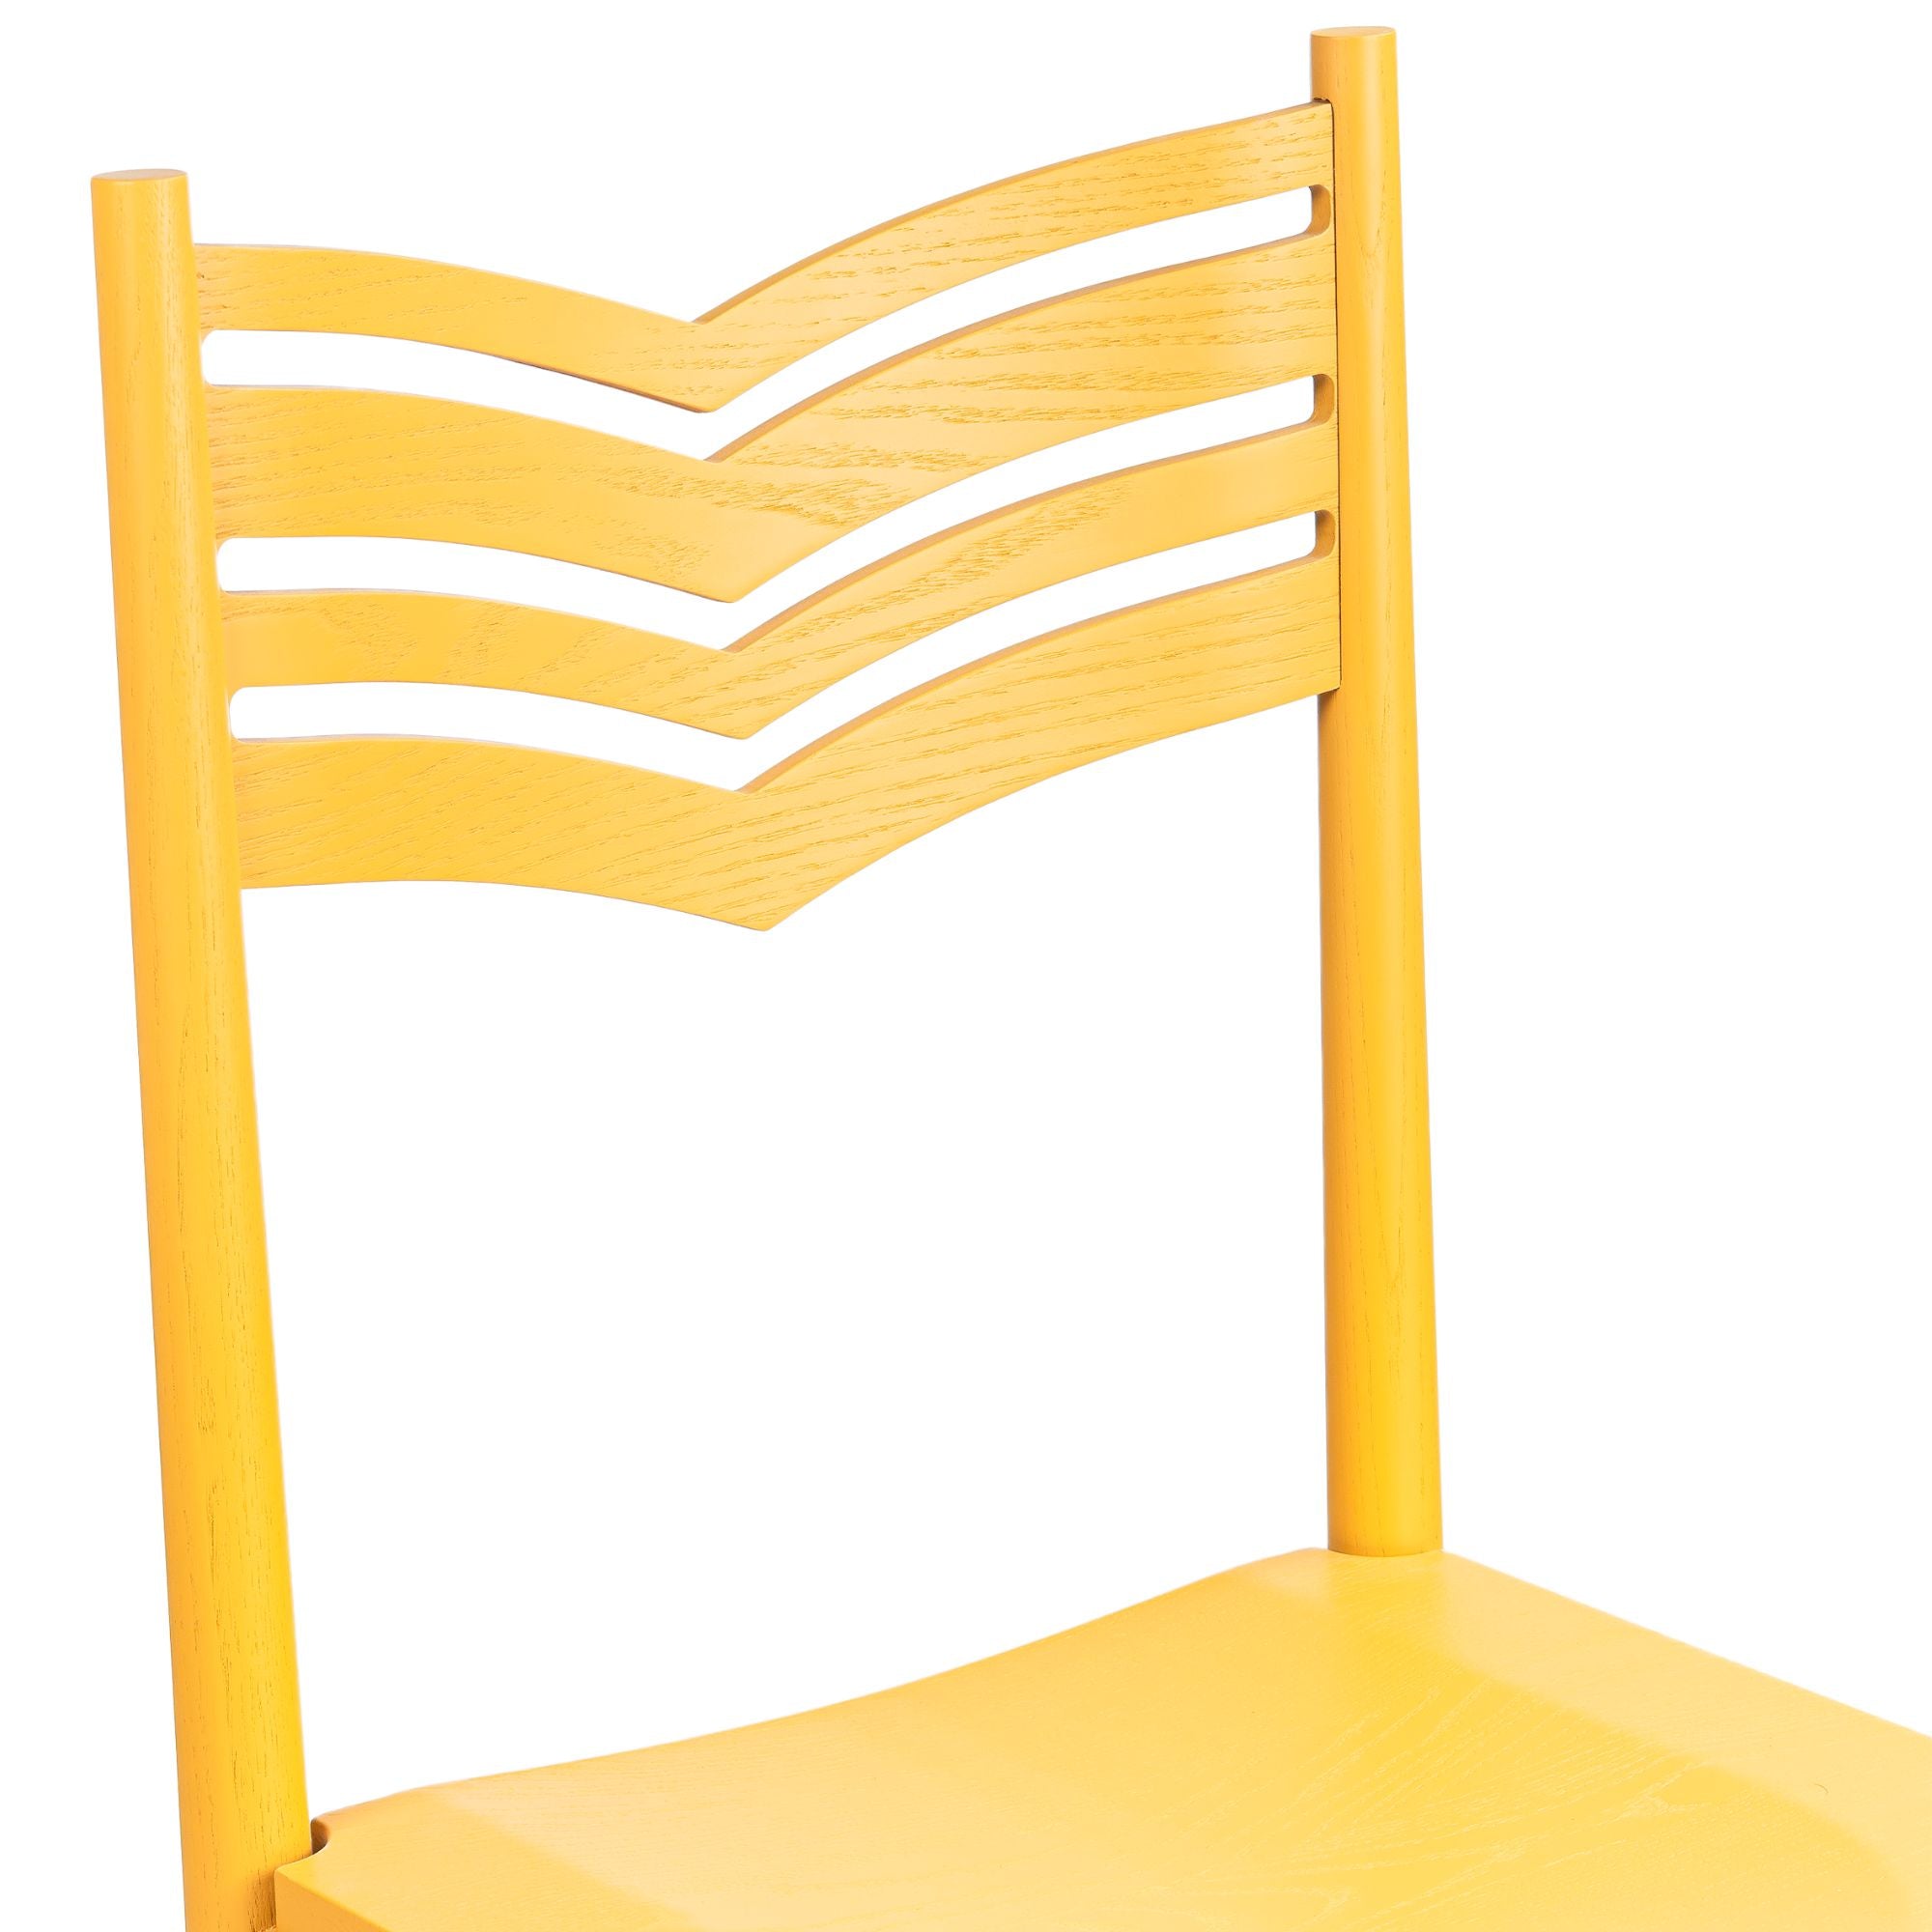 Wiurila Chair